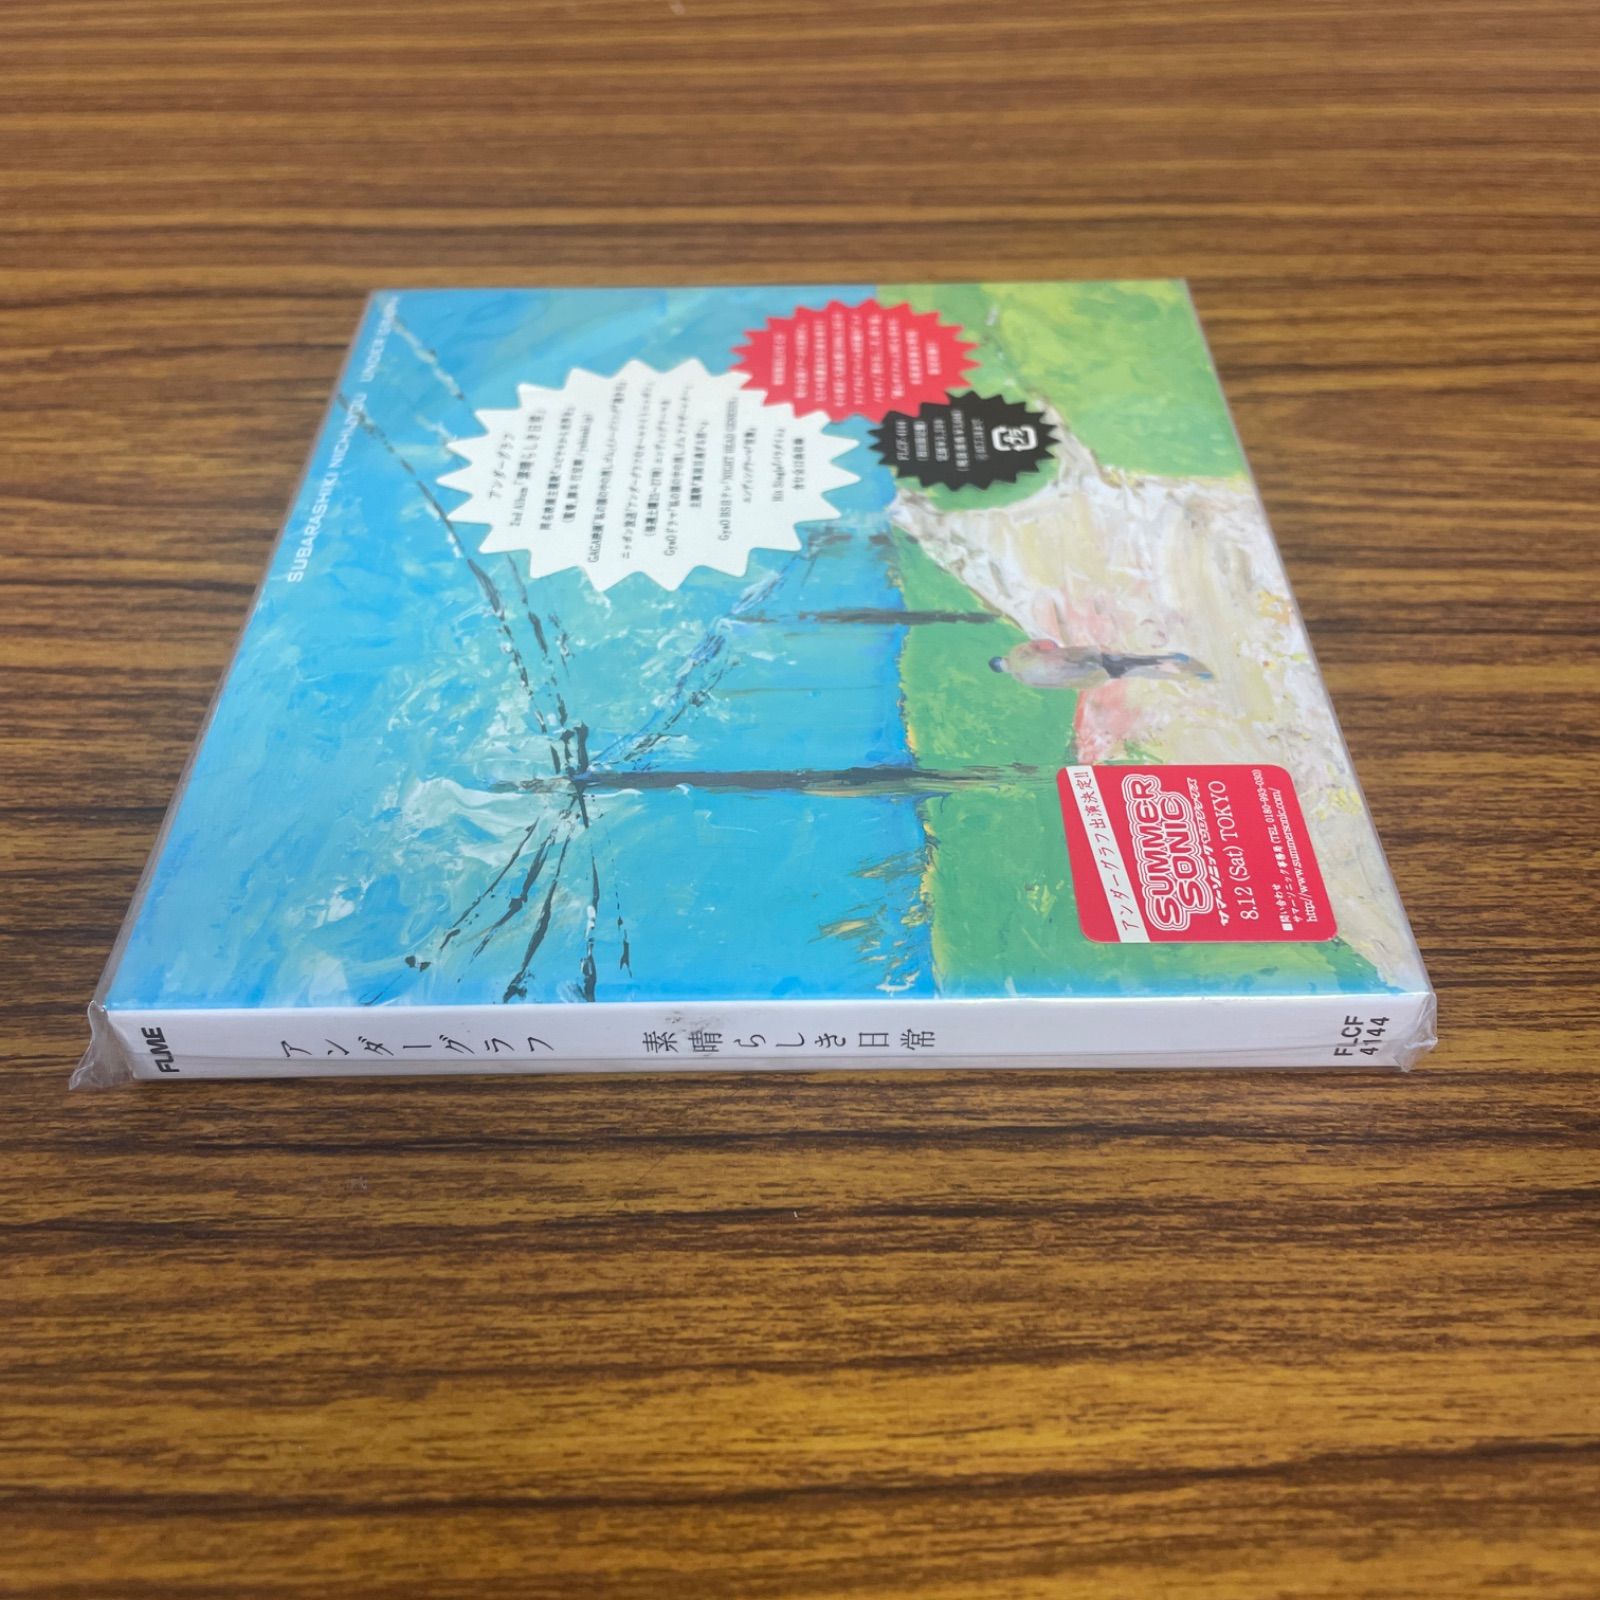 CD アンダーグラフ:素晴らしき日常 【初回限定盤】